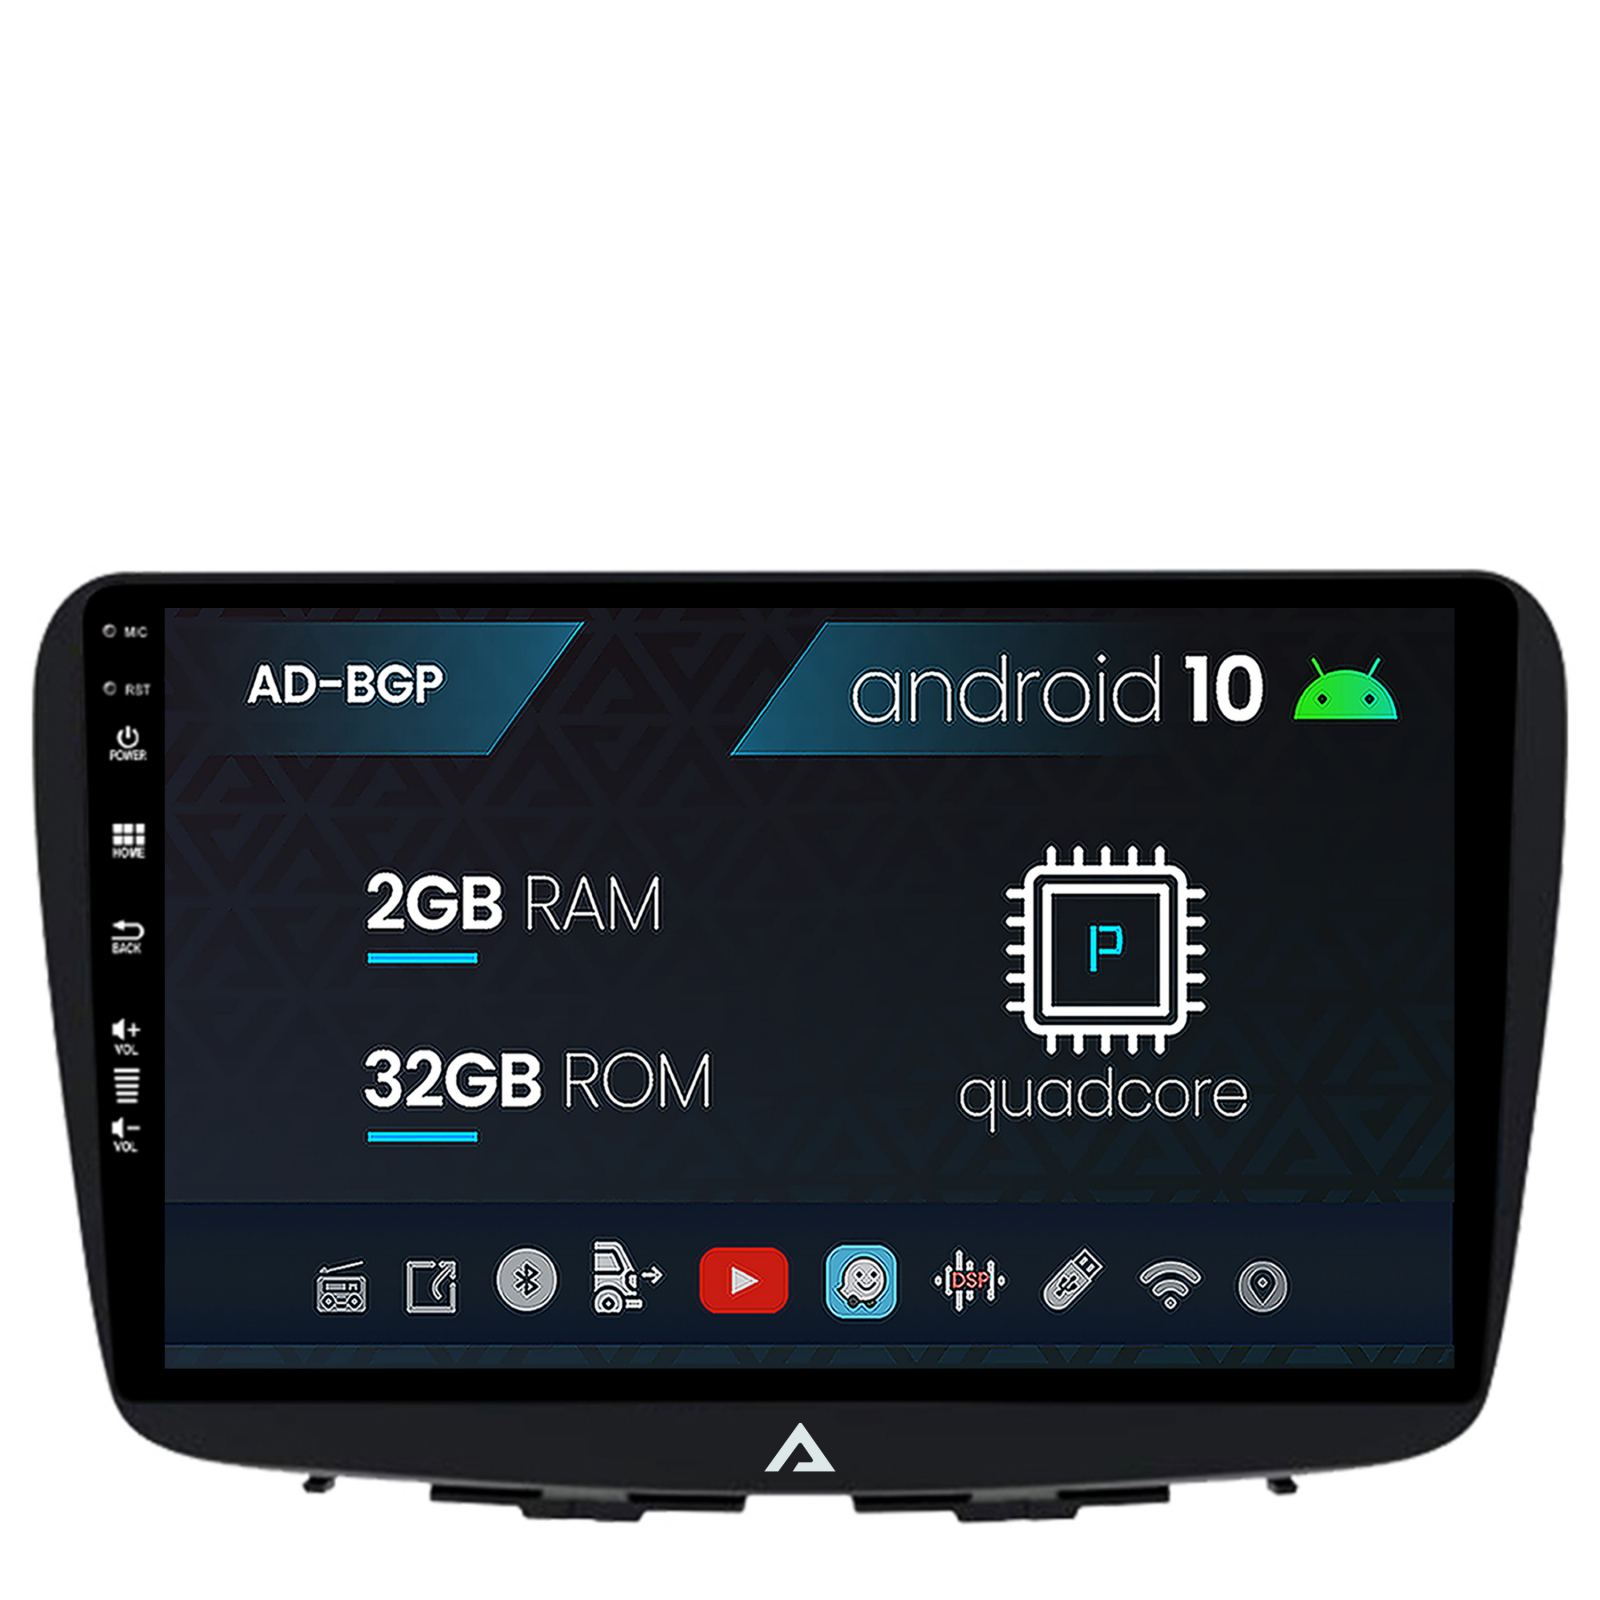 Navigatie Suzuki Baleno, Android 10, P-Quadcore / 2GB RAM + 32GB ROM, 9 Inch - AD-BGP9002+AD-BGRKIT310